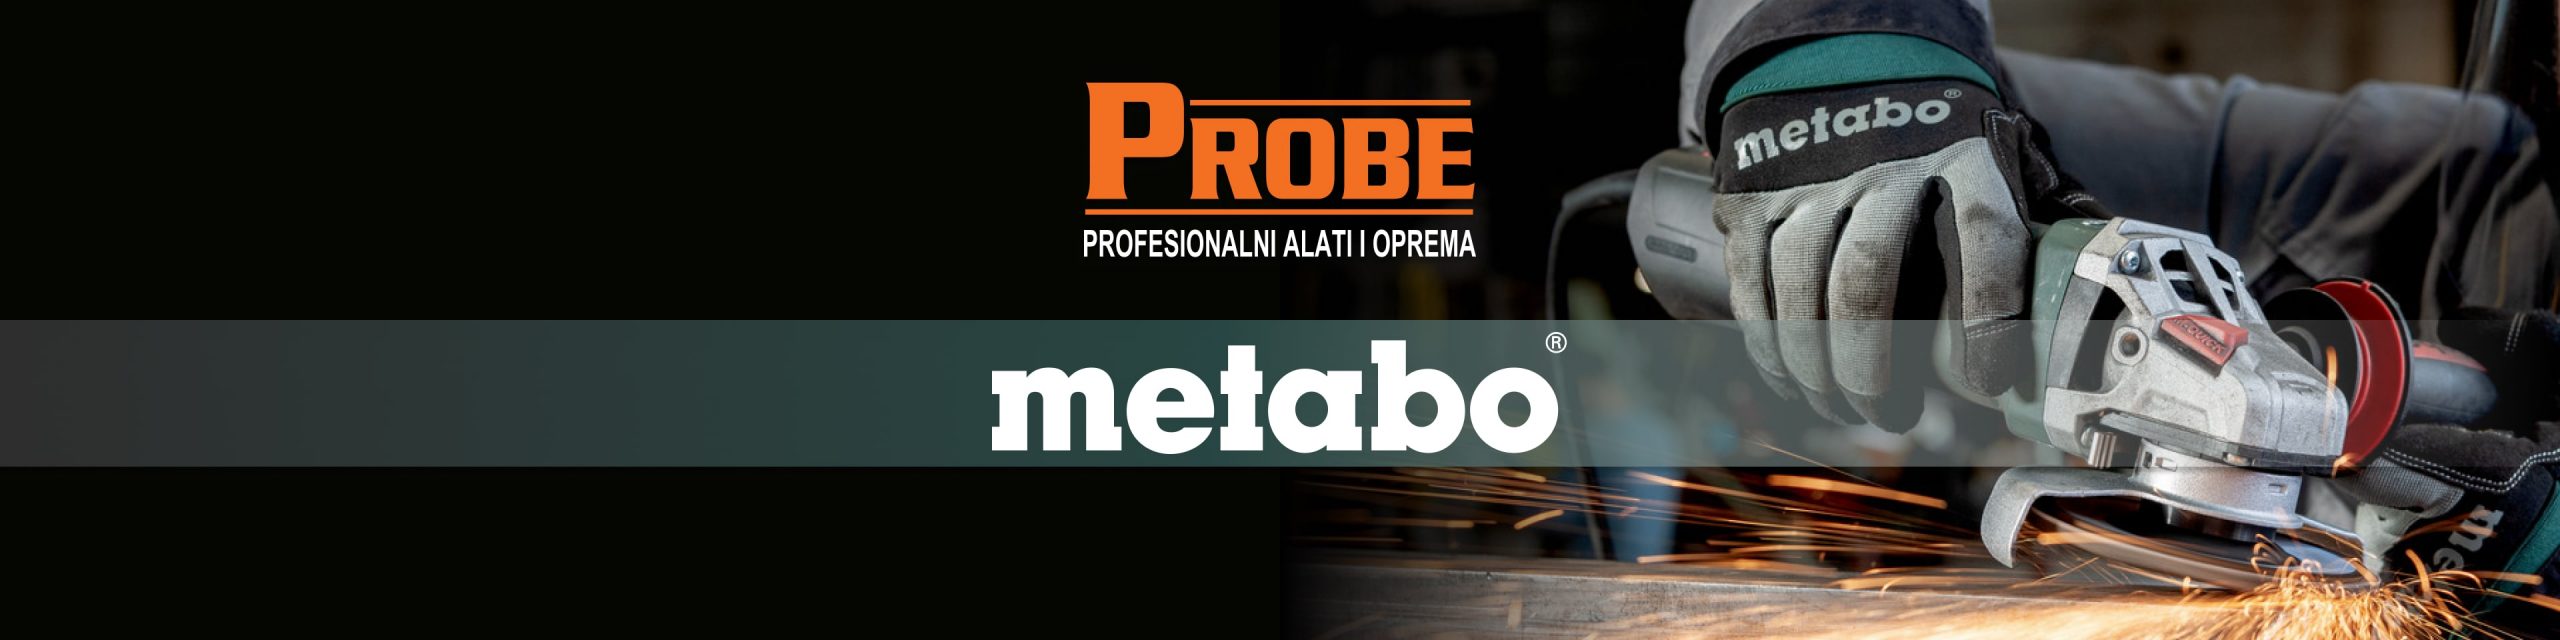 metabo brand